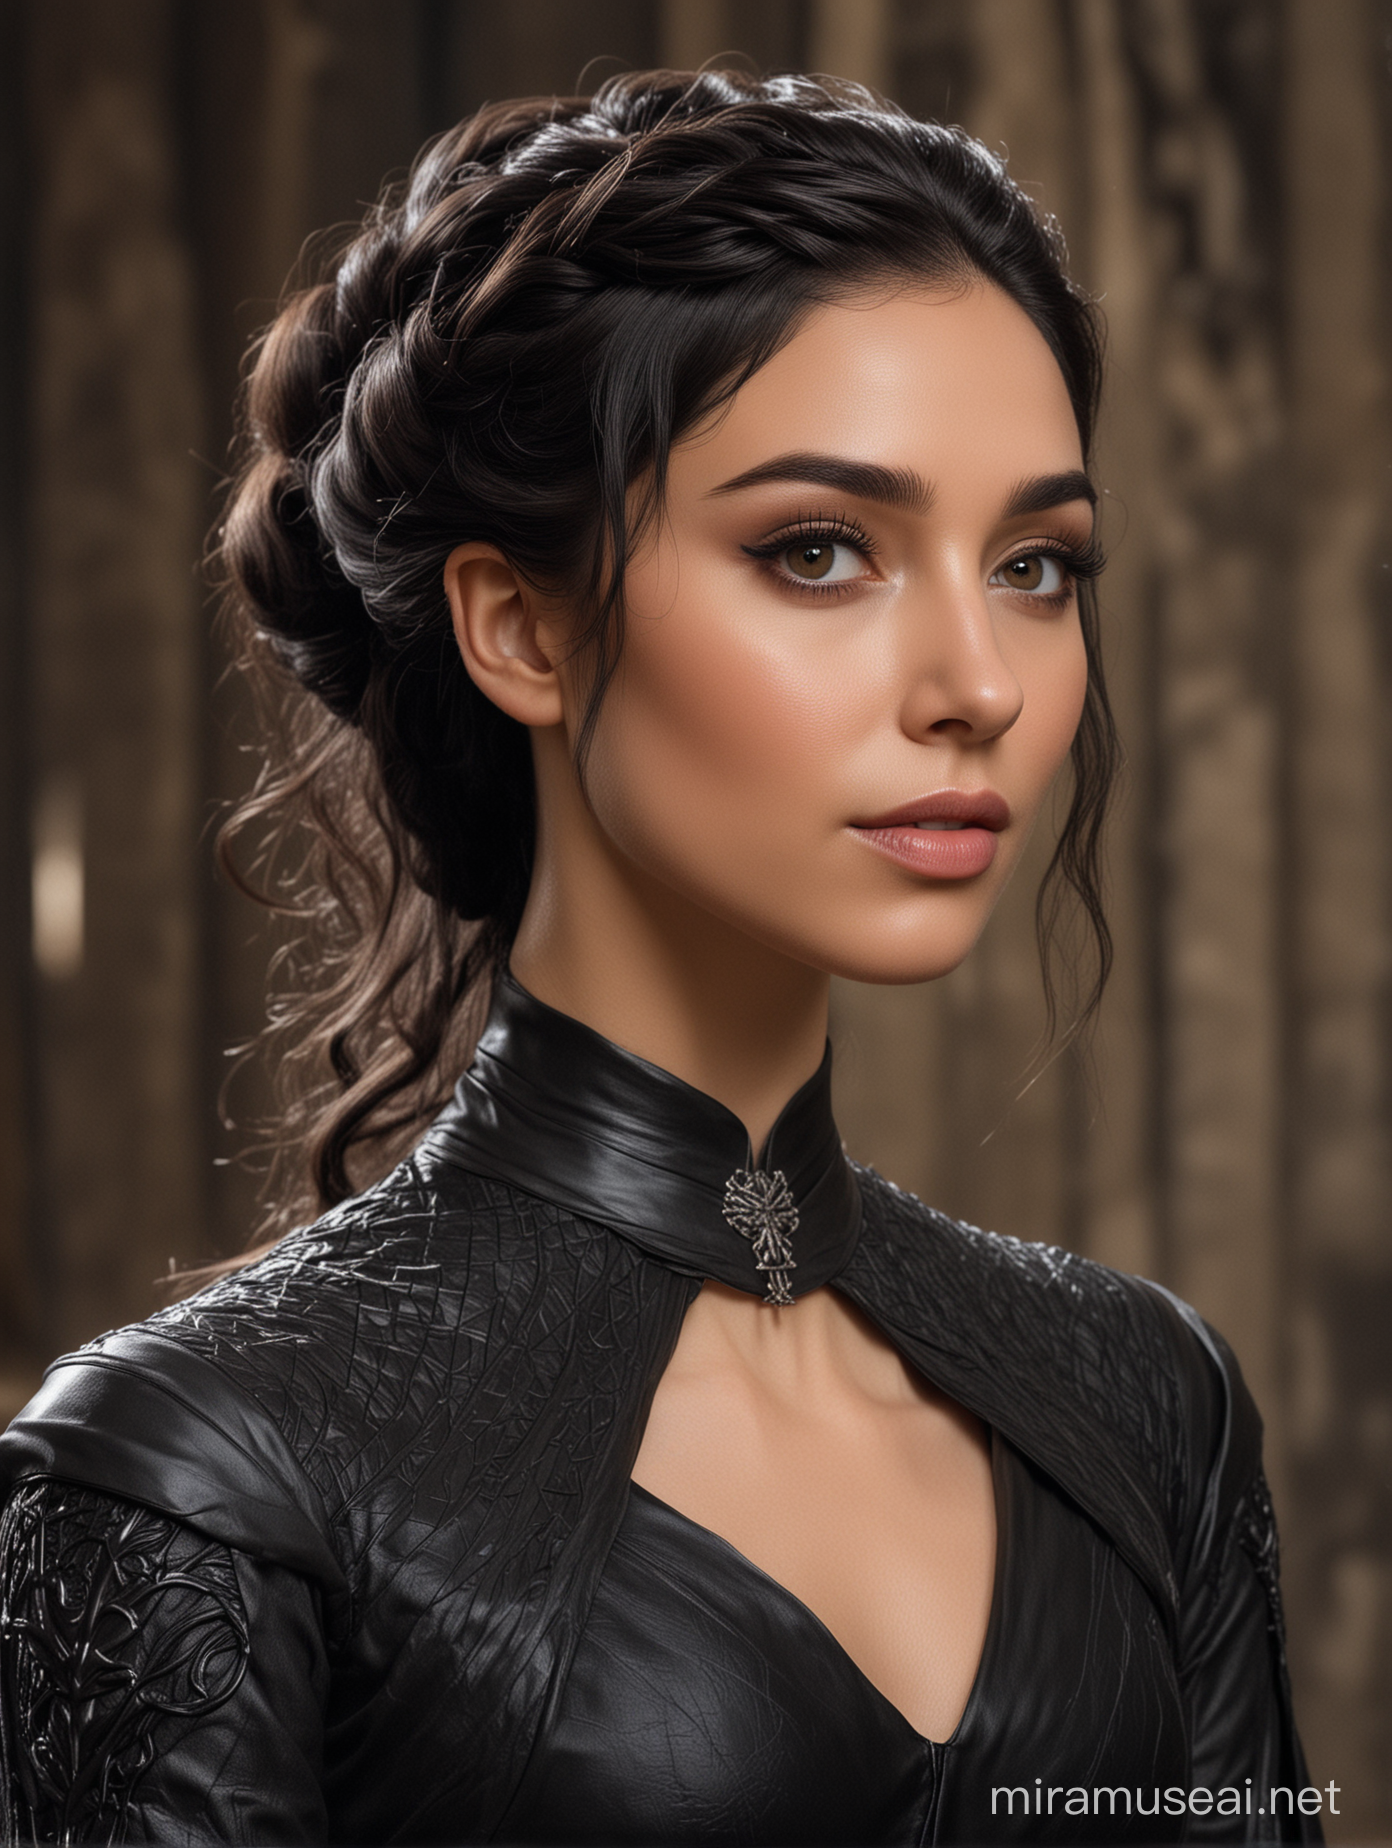 Elegant Valyrian Woman in Traditional Black Dress